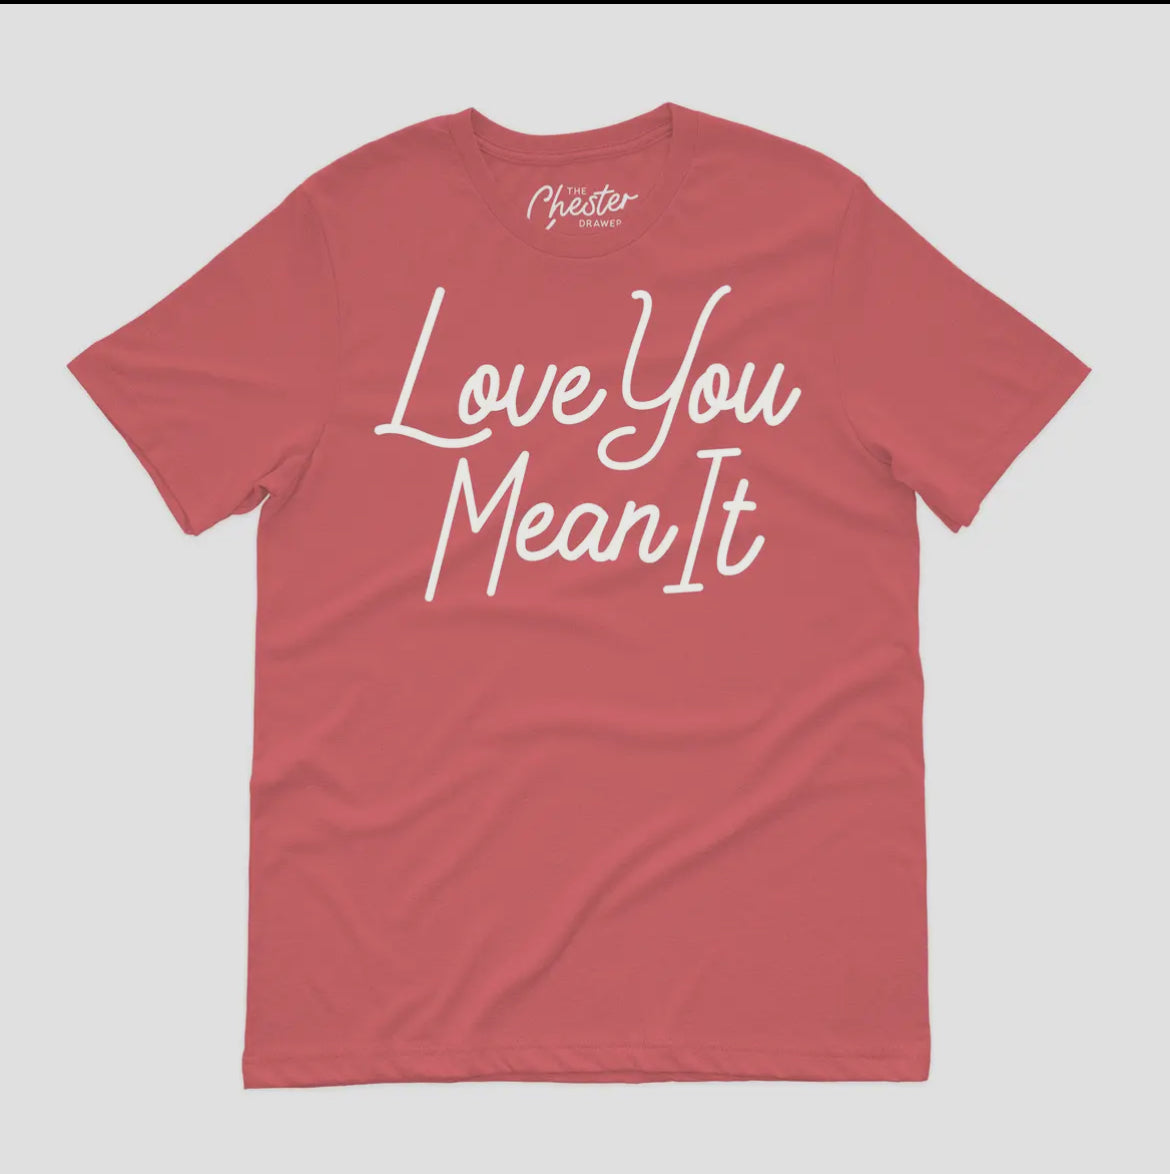 Love You Mean It tshirt